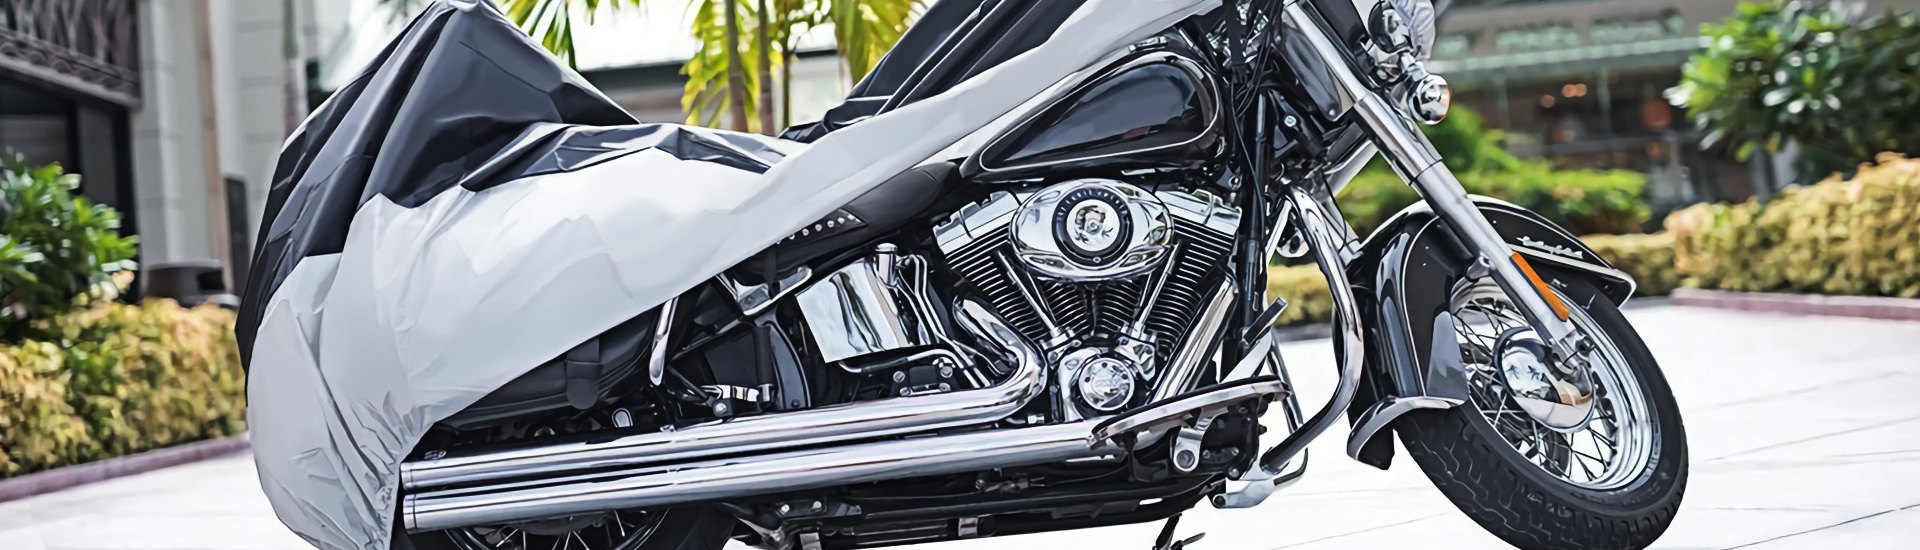 SUPER HEAVY-DUTY BIKE MOTORCYCLE COVER FOR Harley-Davidson Street Rod 2018